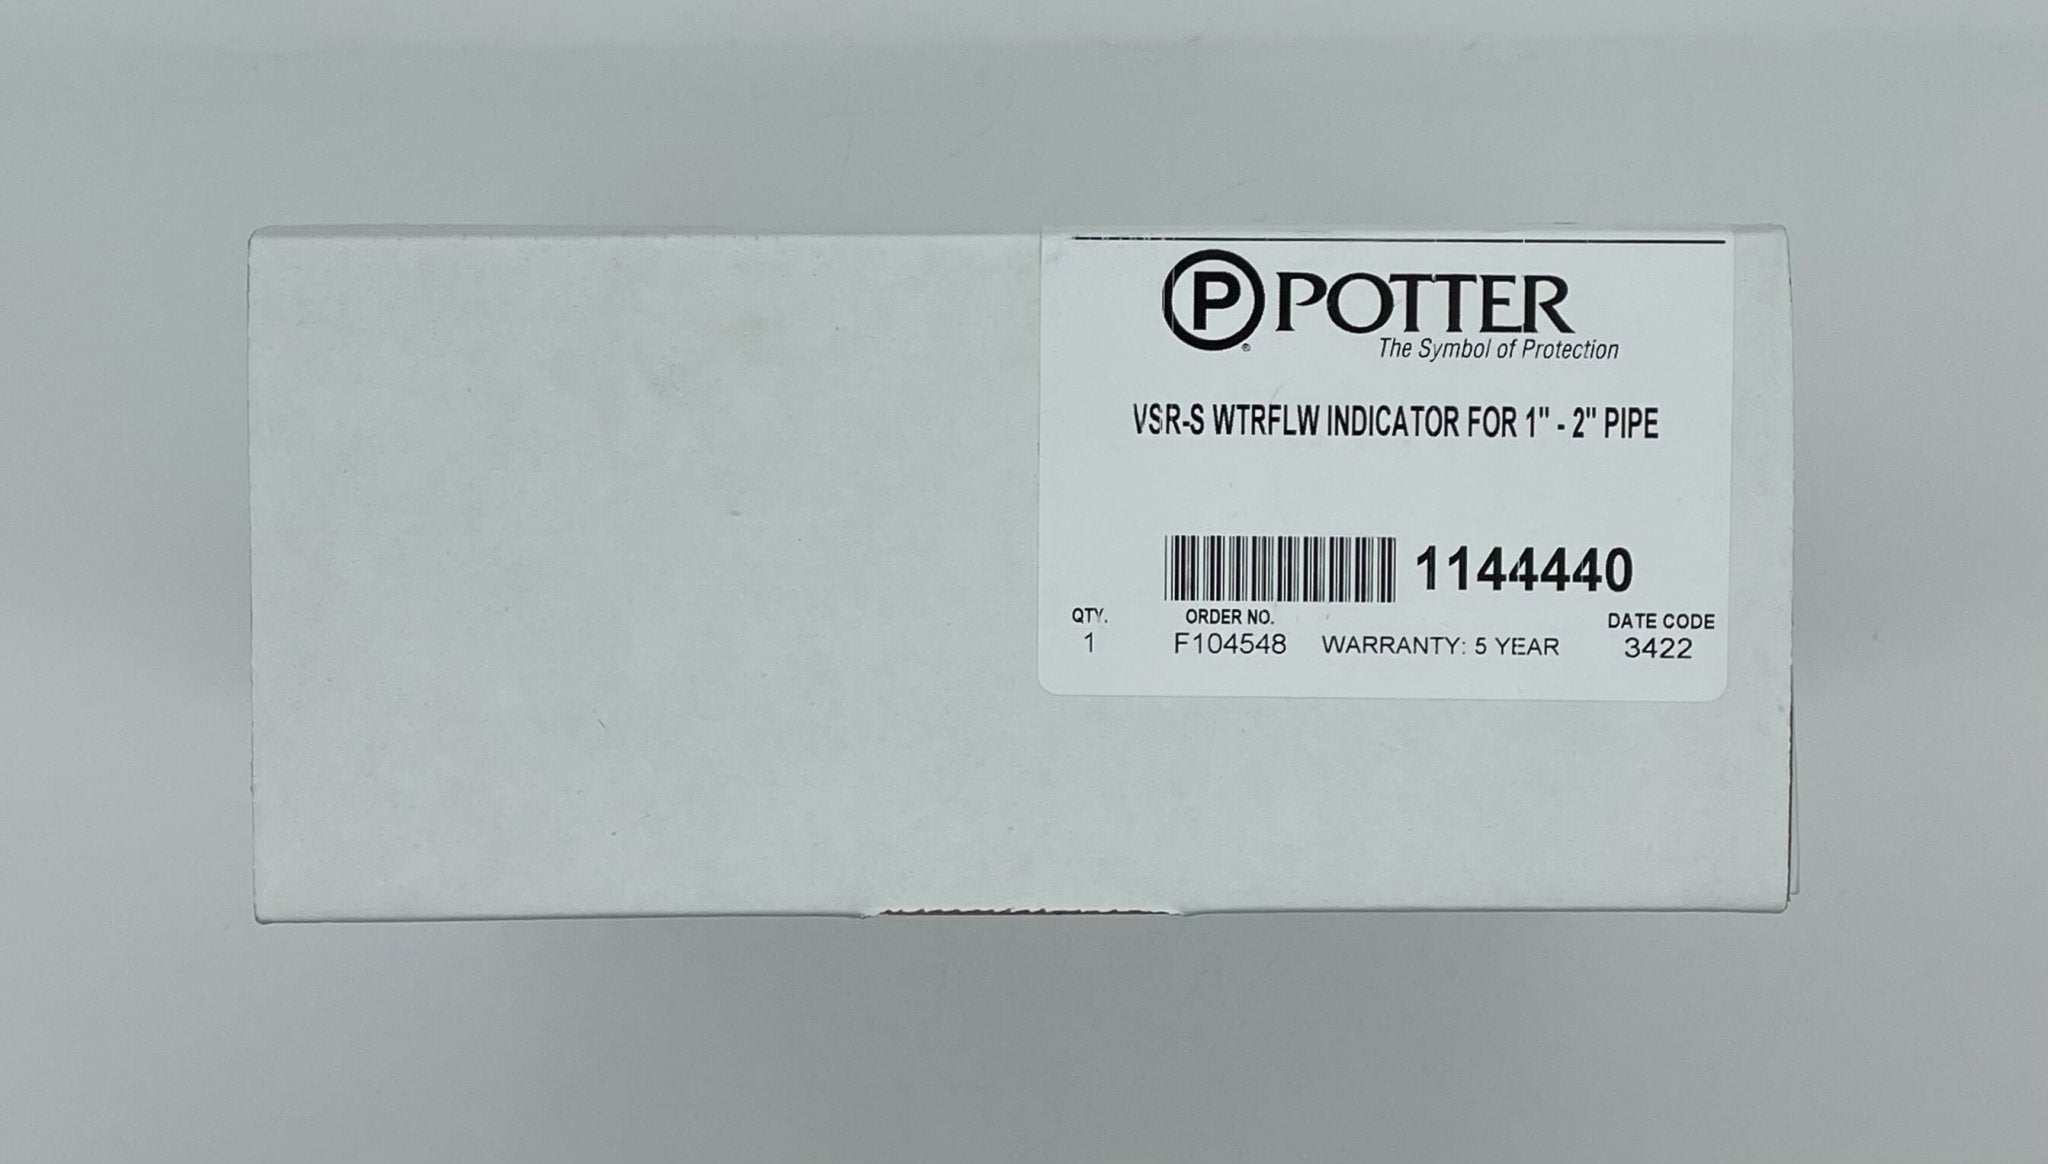 Potter VSR-S - The Fire Alarm Supplier